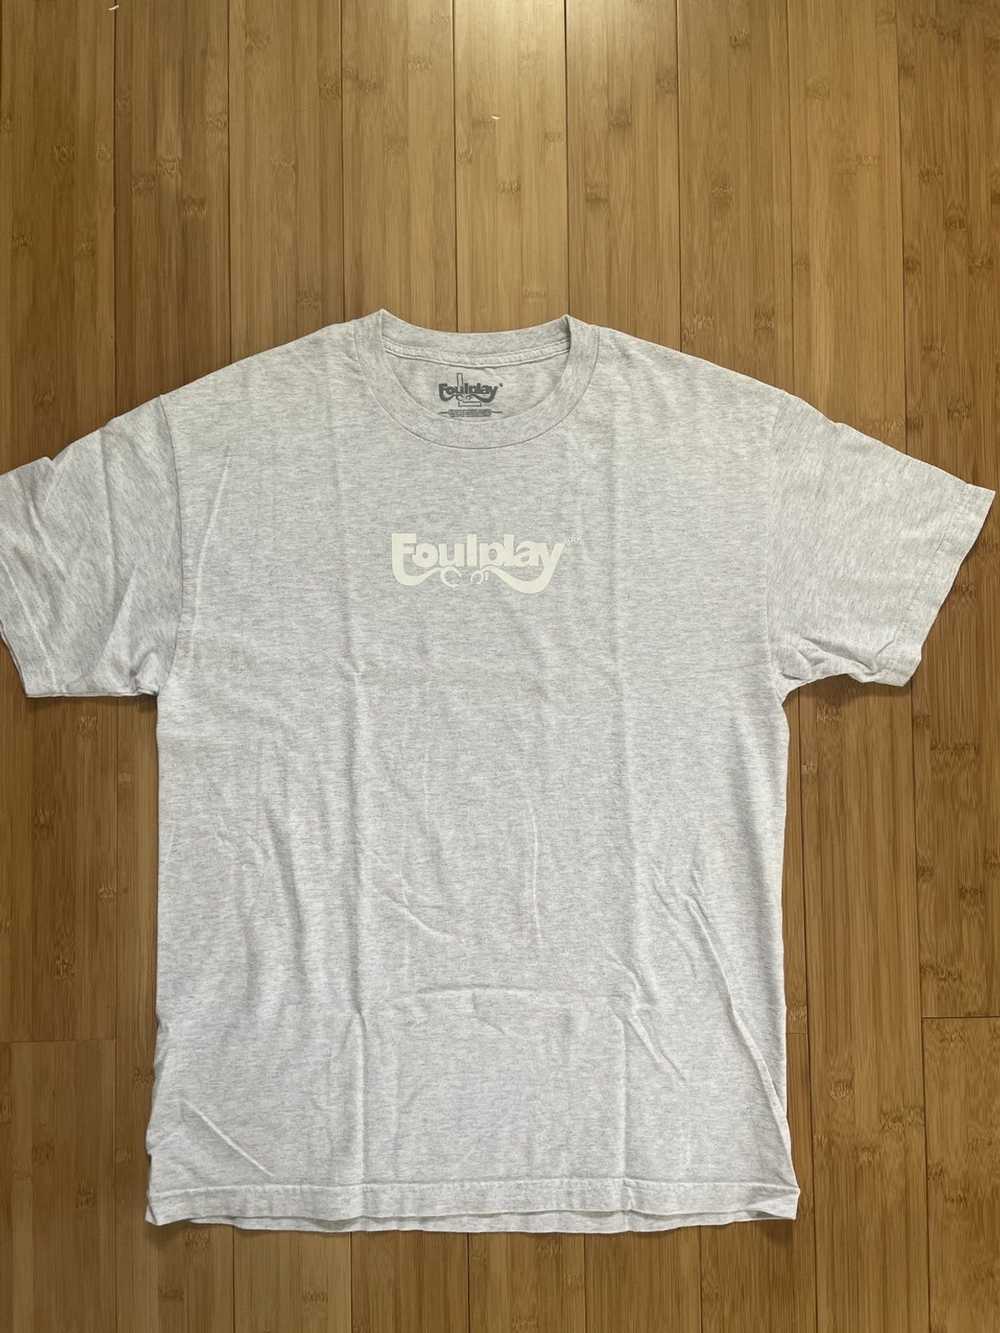 Foulplay Company Foulplay shirt - image 2